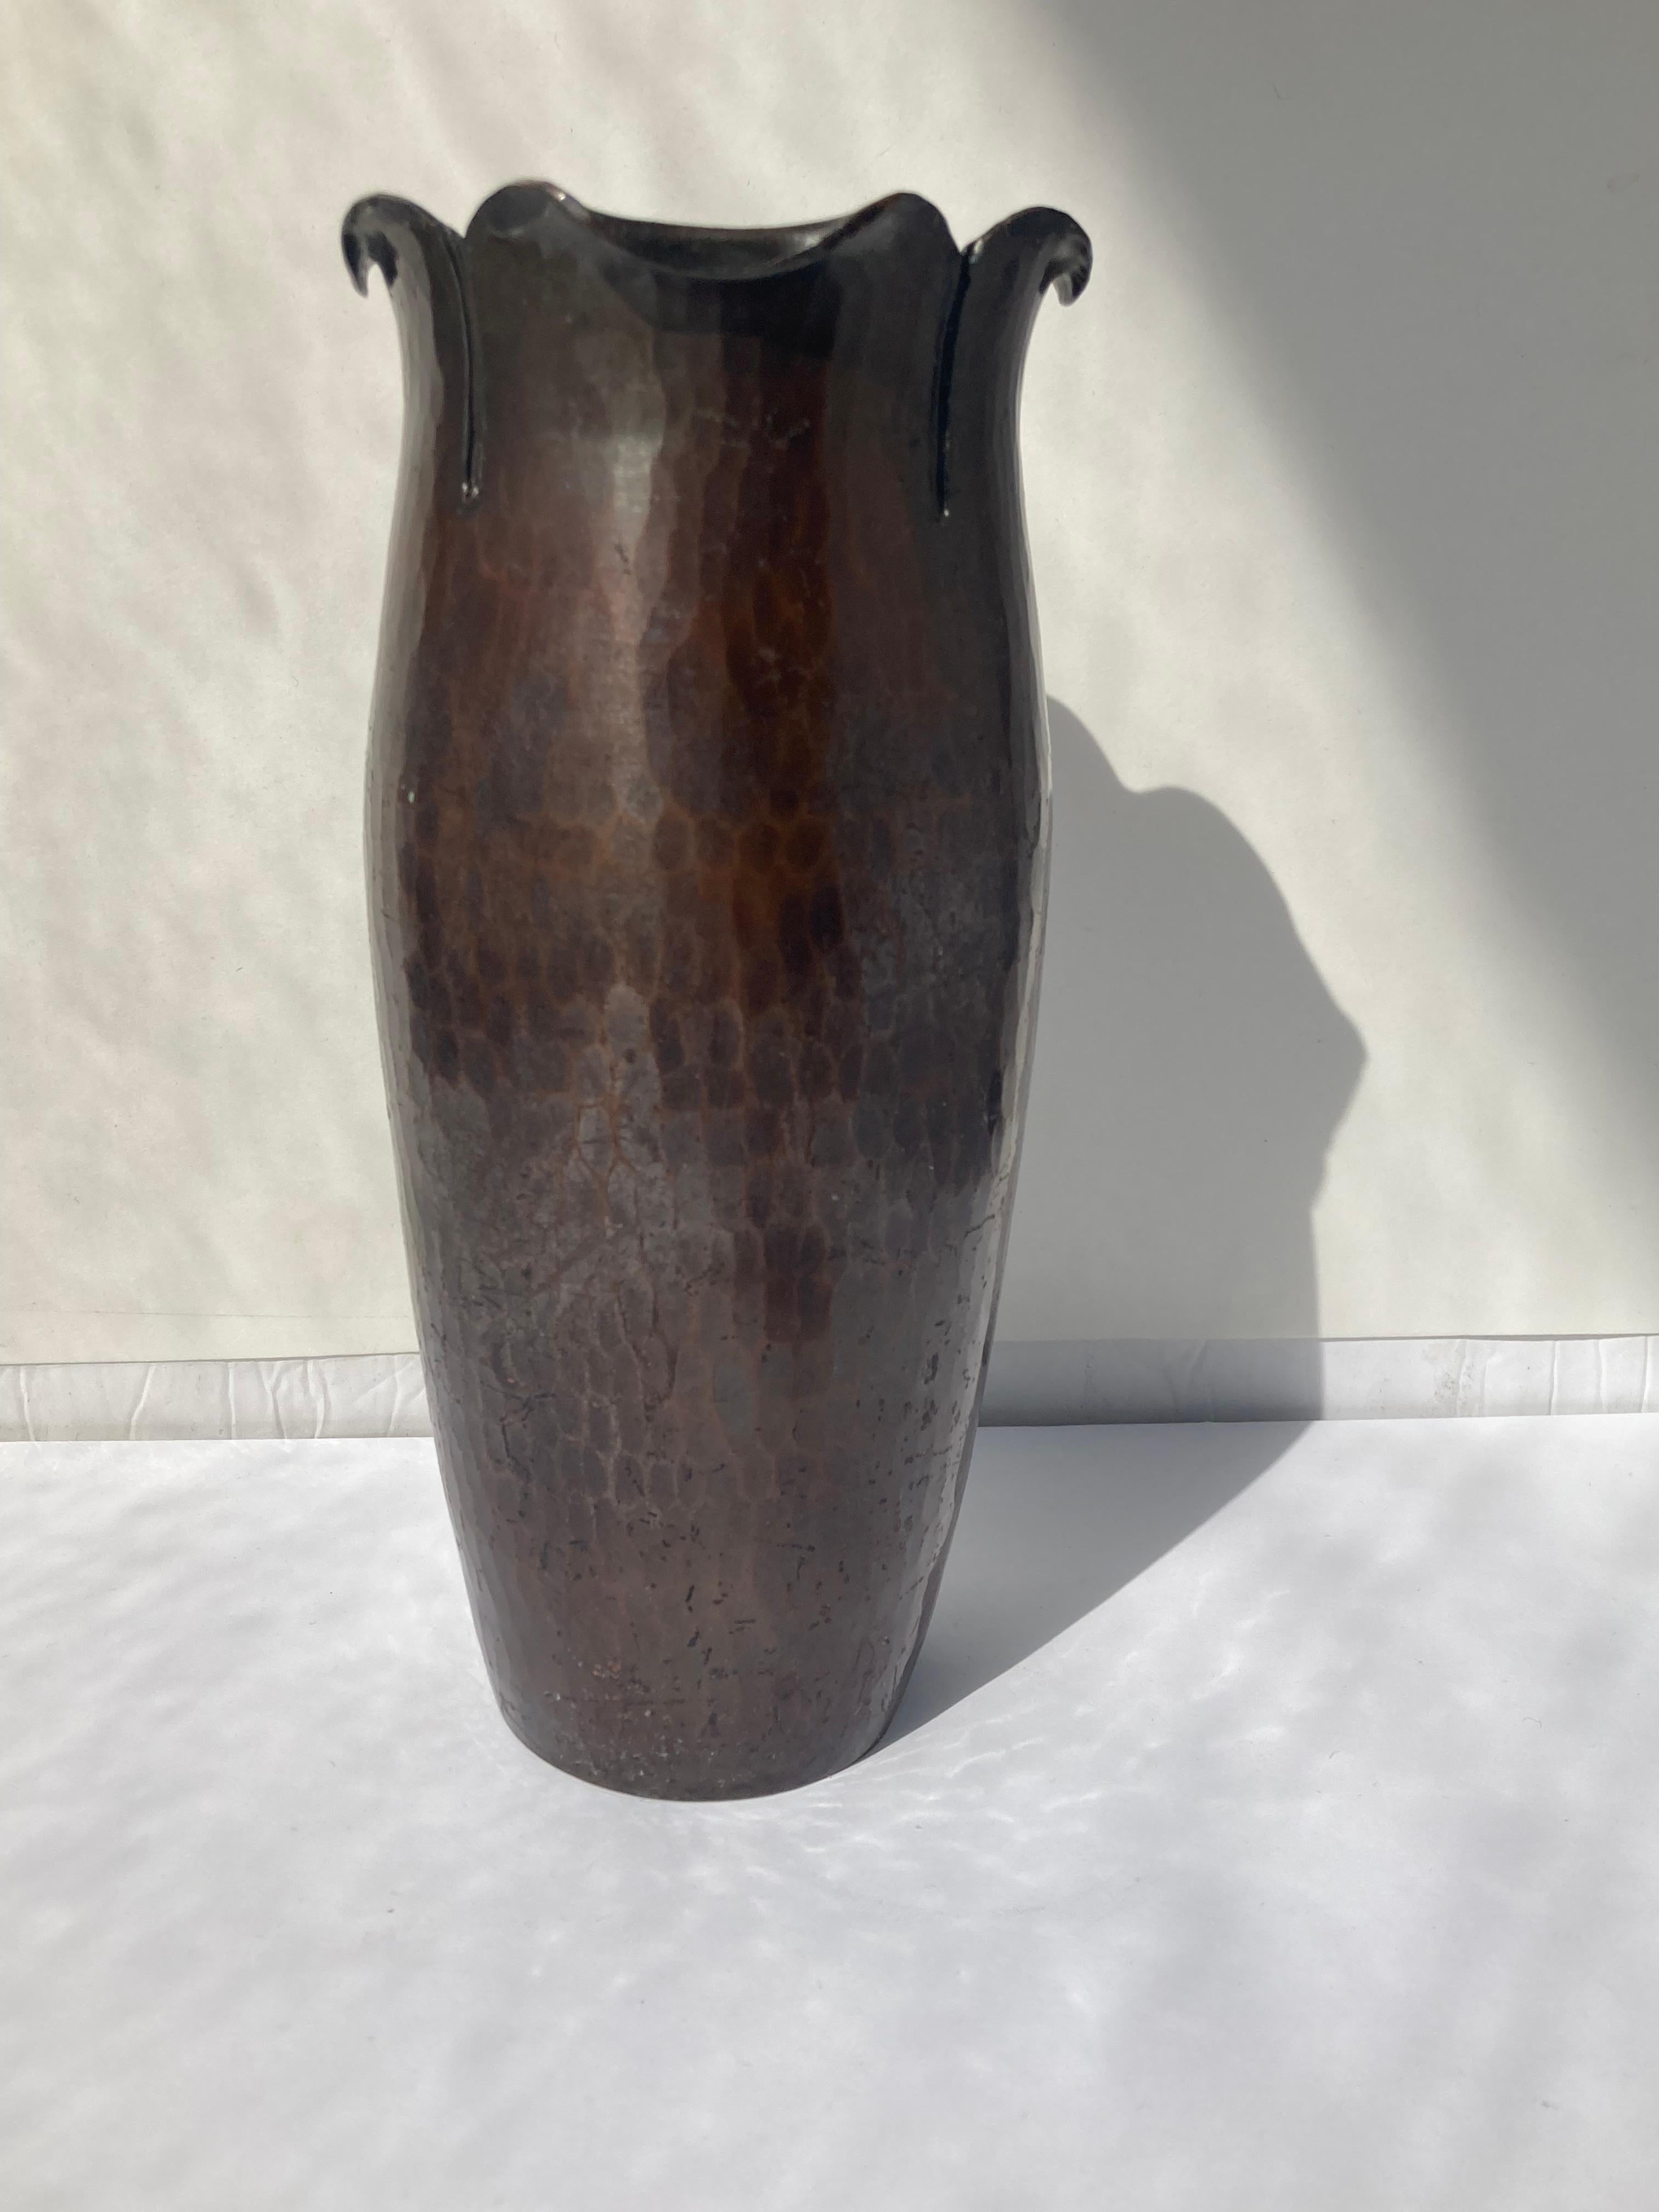 roycroft vase